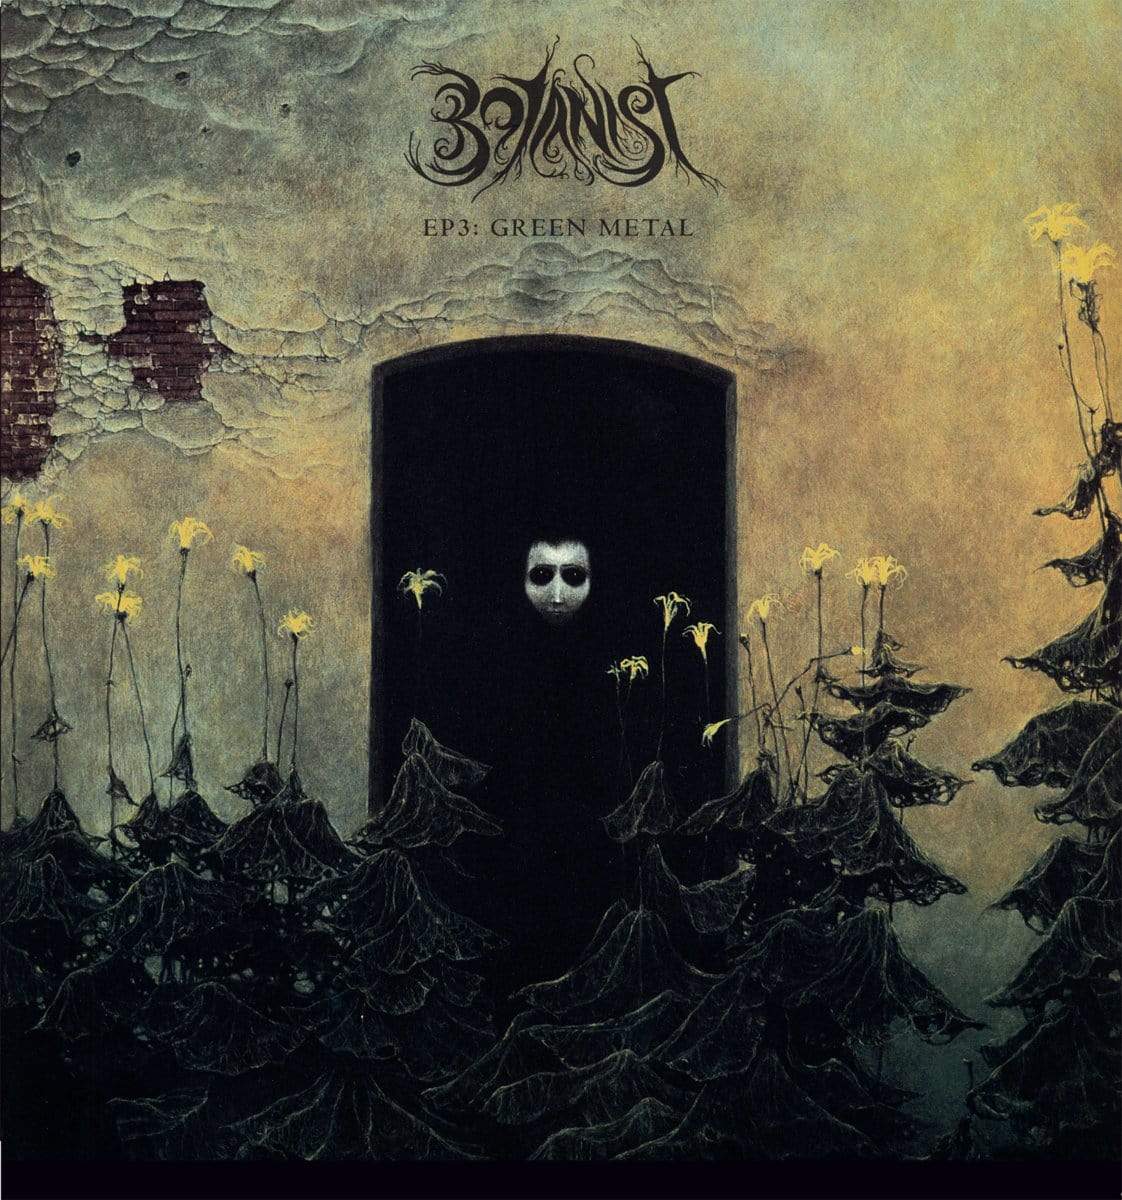 Favonian Vinyl,Distributed titles Botanist / Oskoreien "EP3: Green Metal / Deterministic Chaos" LP